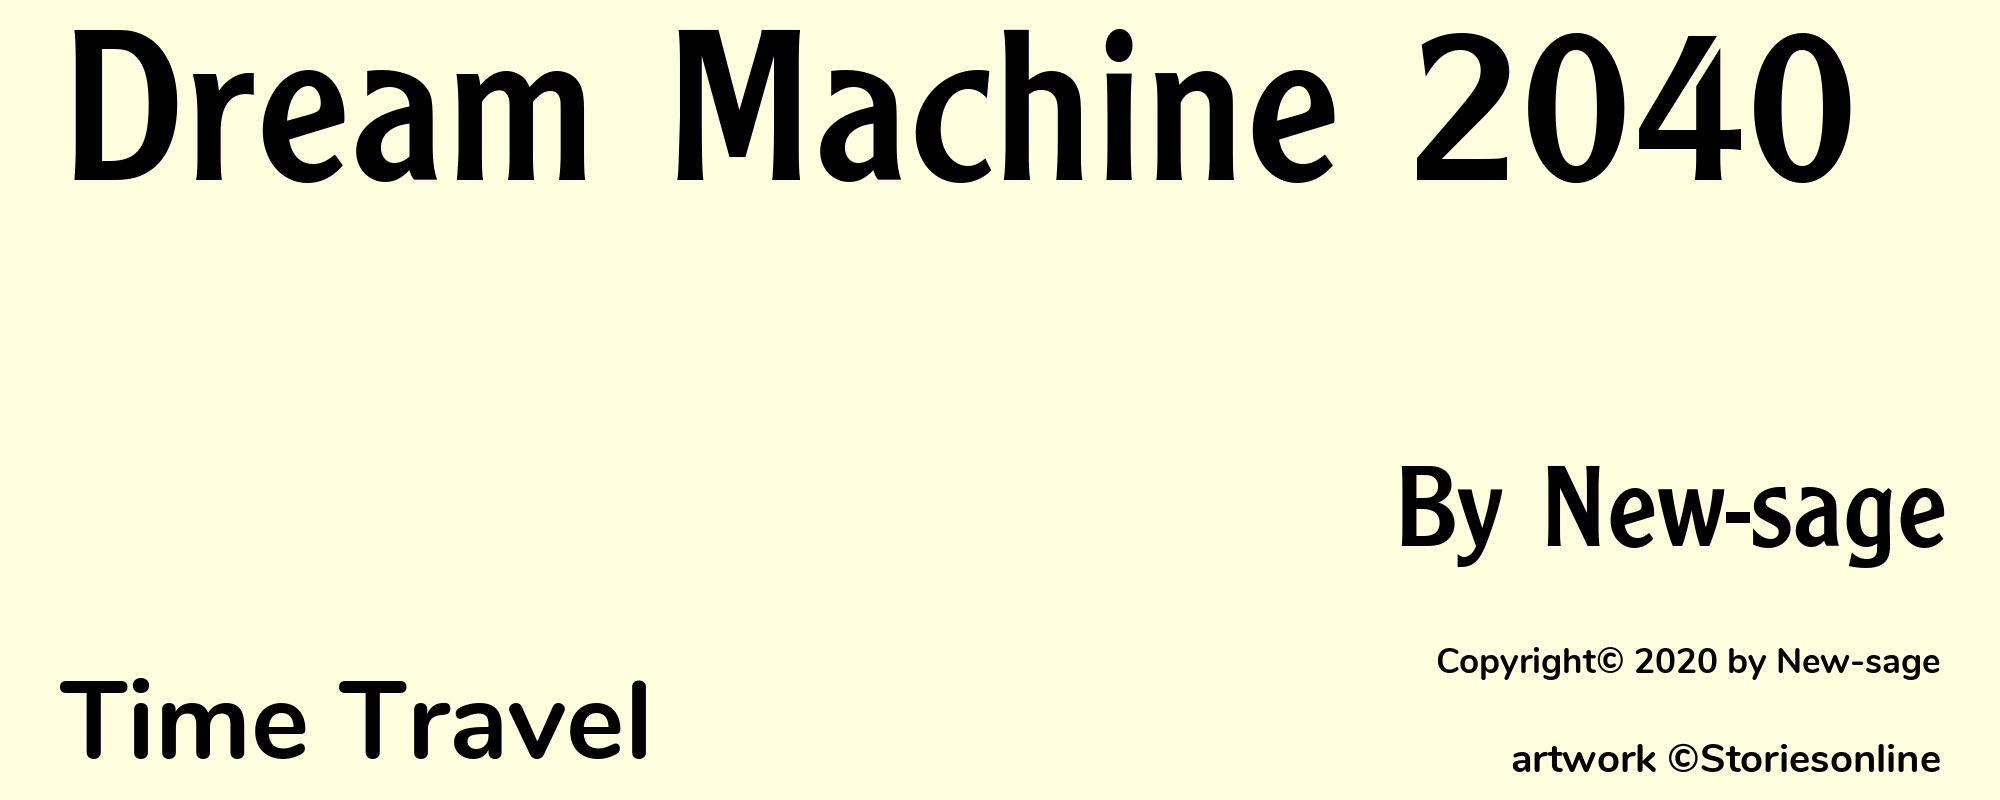 Dream Machine 2040 - Cover